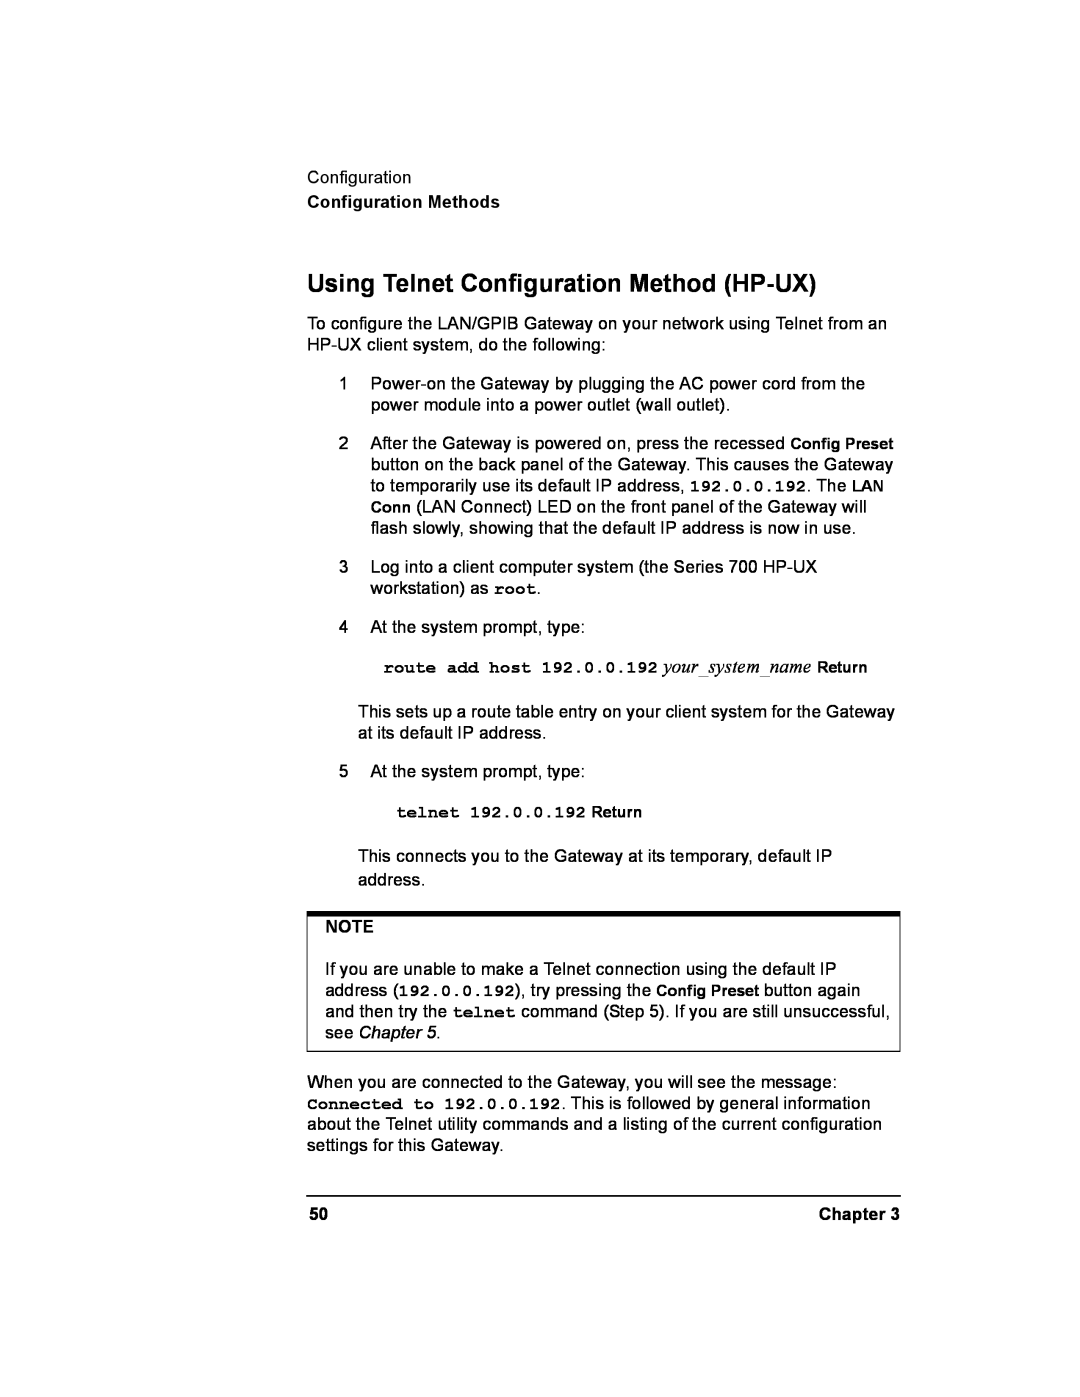 Agilent Technologies E2050-90003 manual Using Telnet Configuration Method HP-UX, Configuration Methods, Chapter 